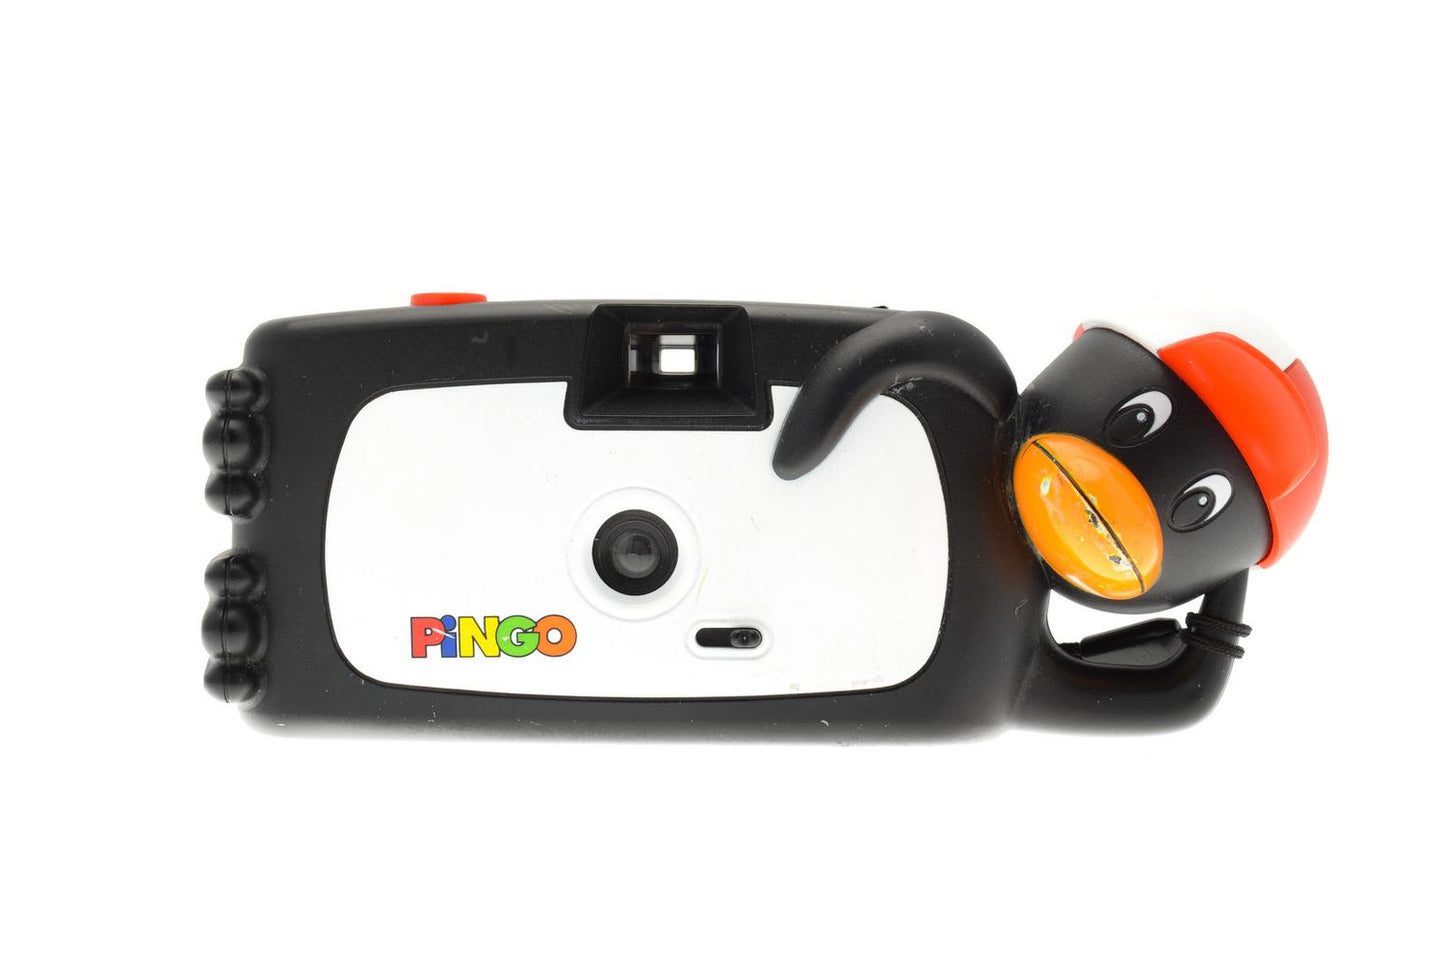 Nickname Pingo - Camera